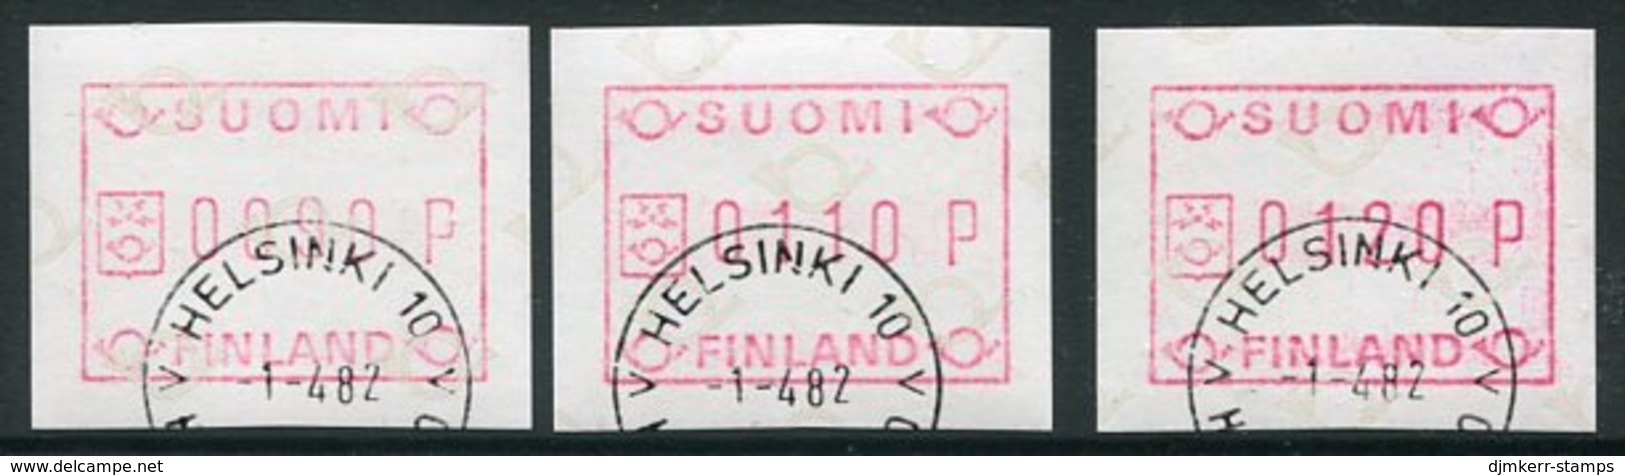 FINLAND 1982 Definitive  ATM, Three Values Used..  Michel 1 - Automatenmarken [ATM]